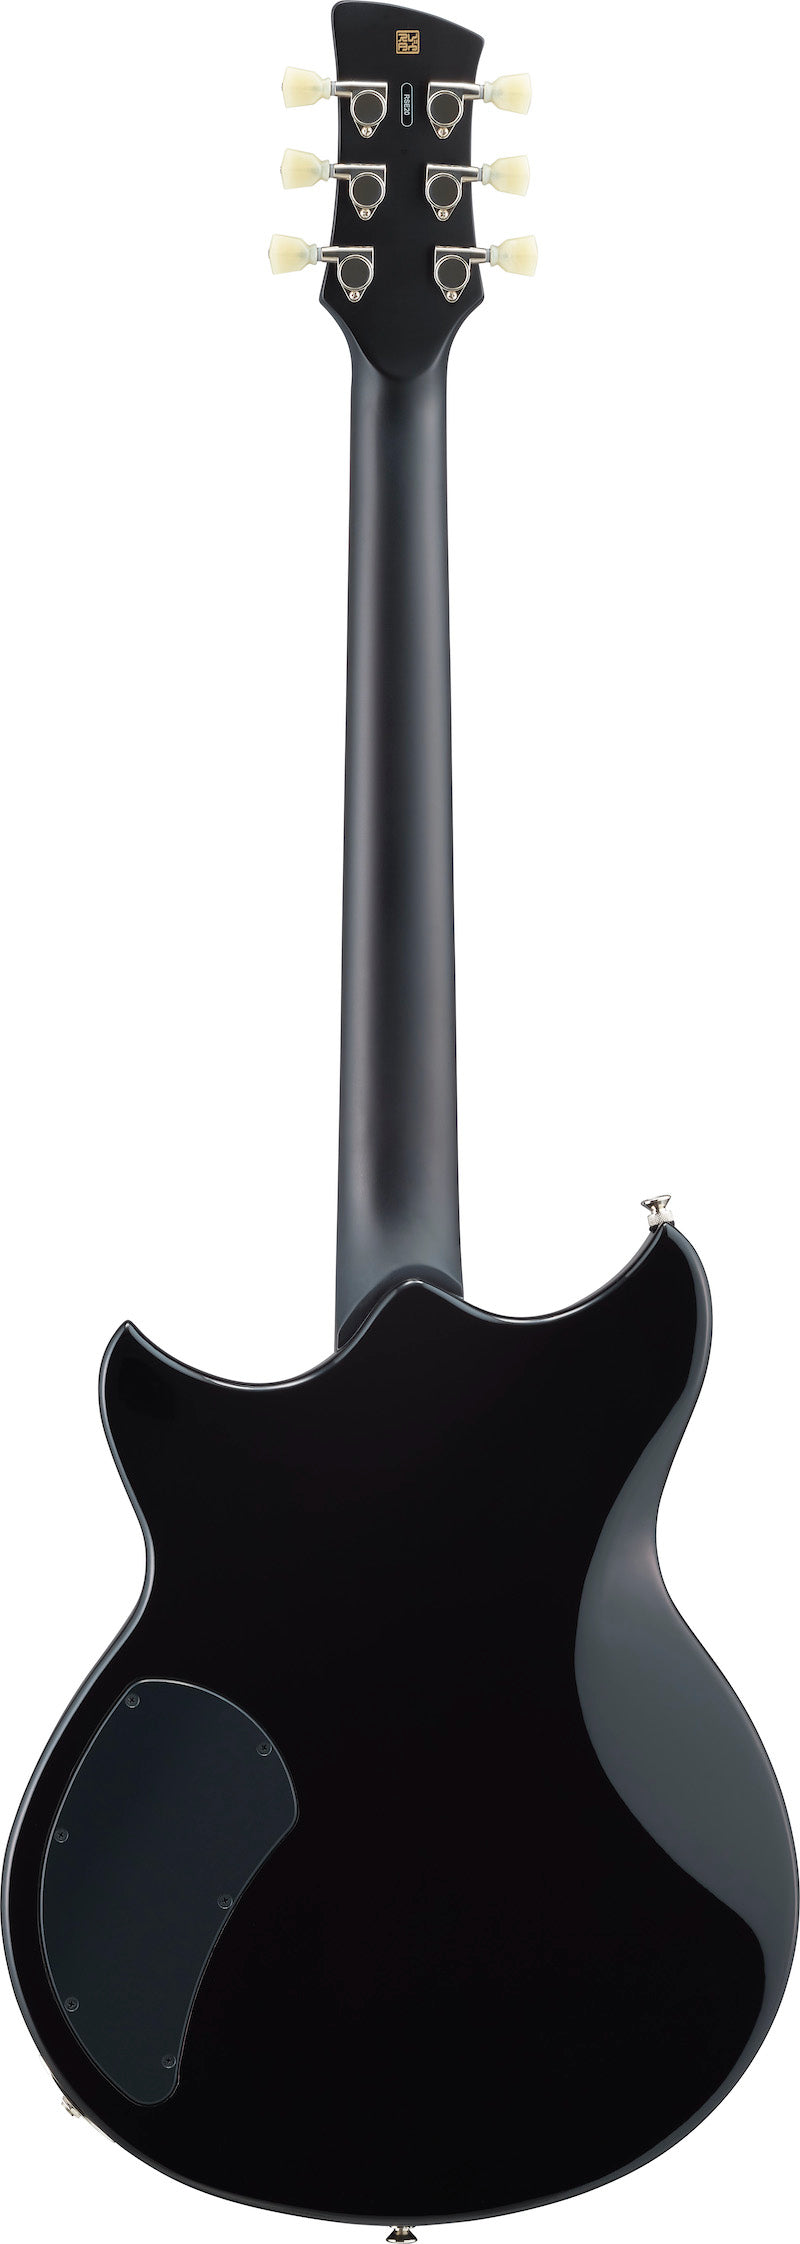 Yamaha Revstar RSE20 BL Electric Guitar - Black